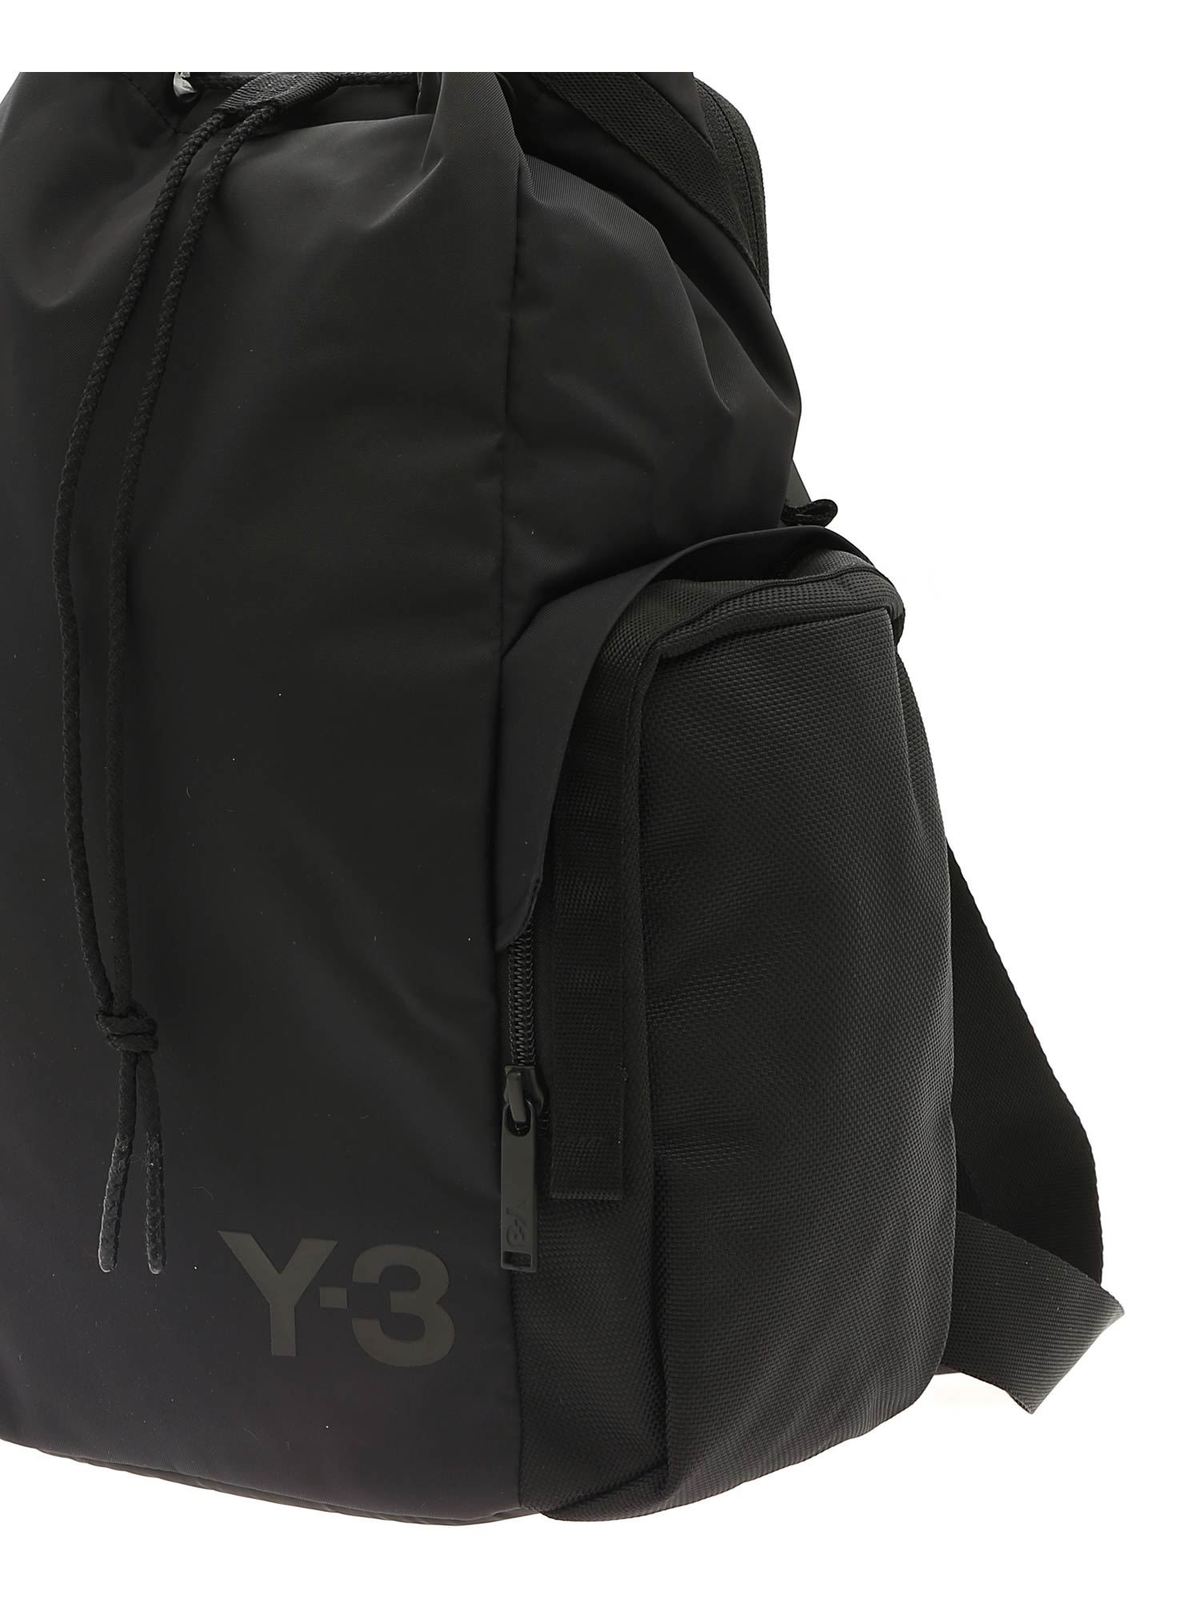 y3 yohji backpack